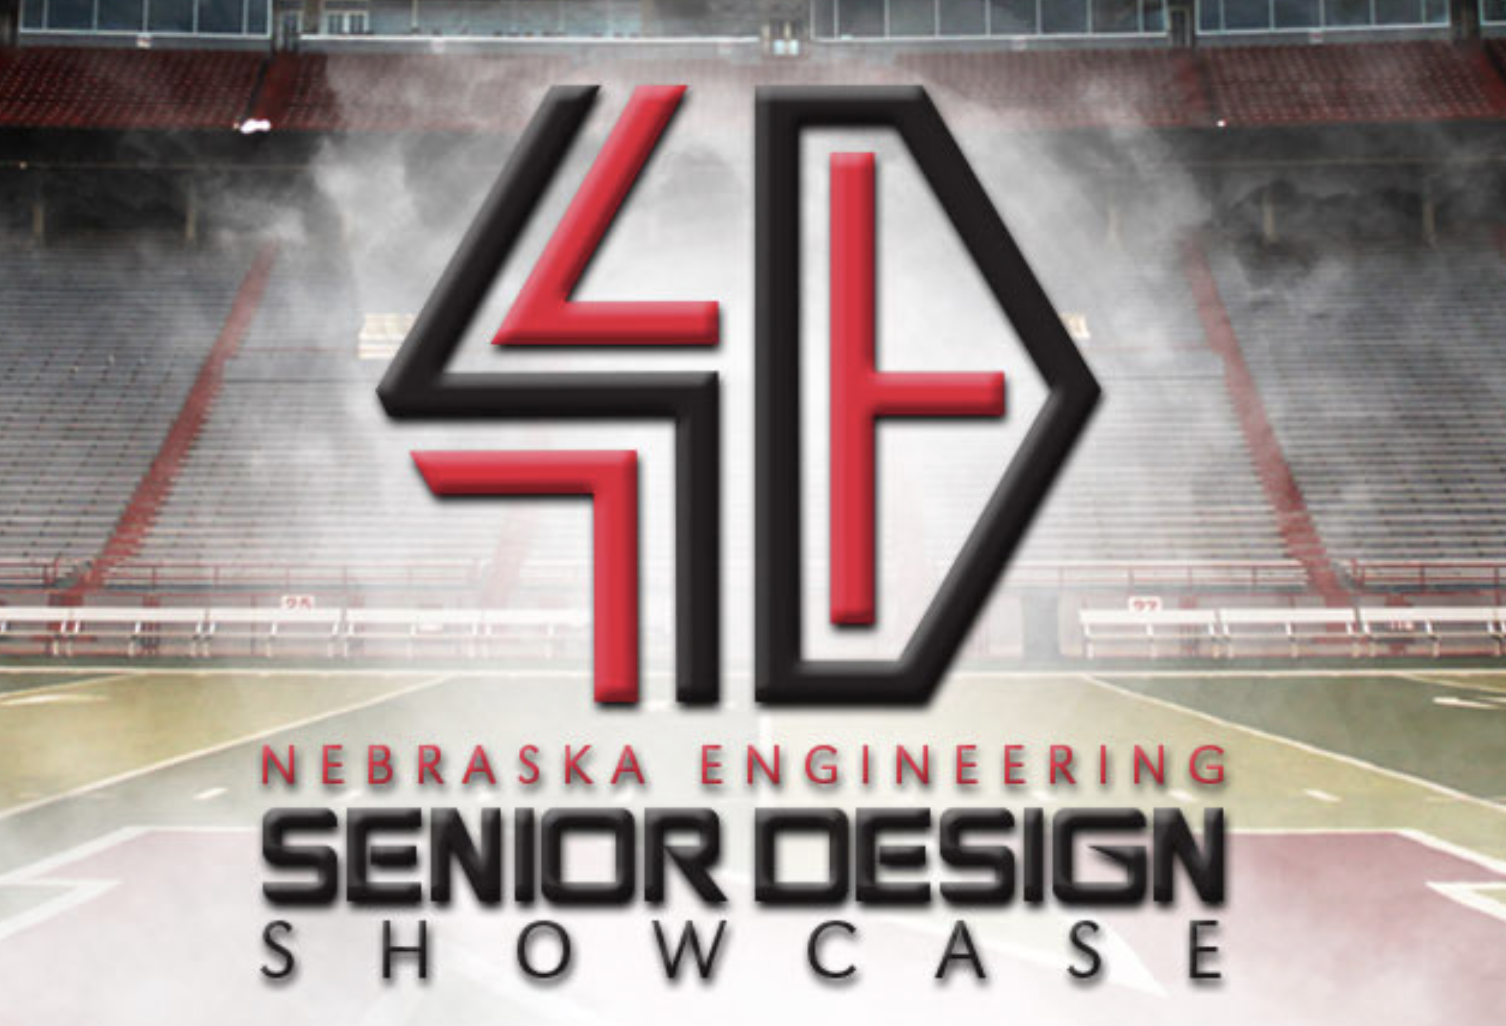 Nebraska Engineering Senior Design Showcase